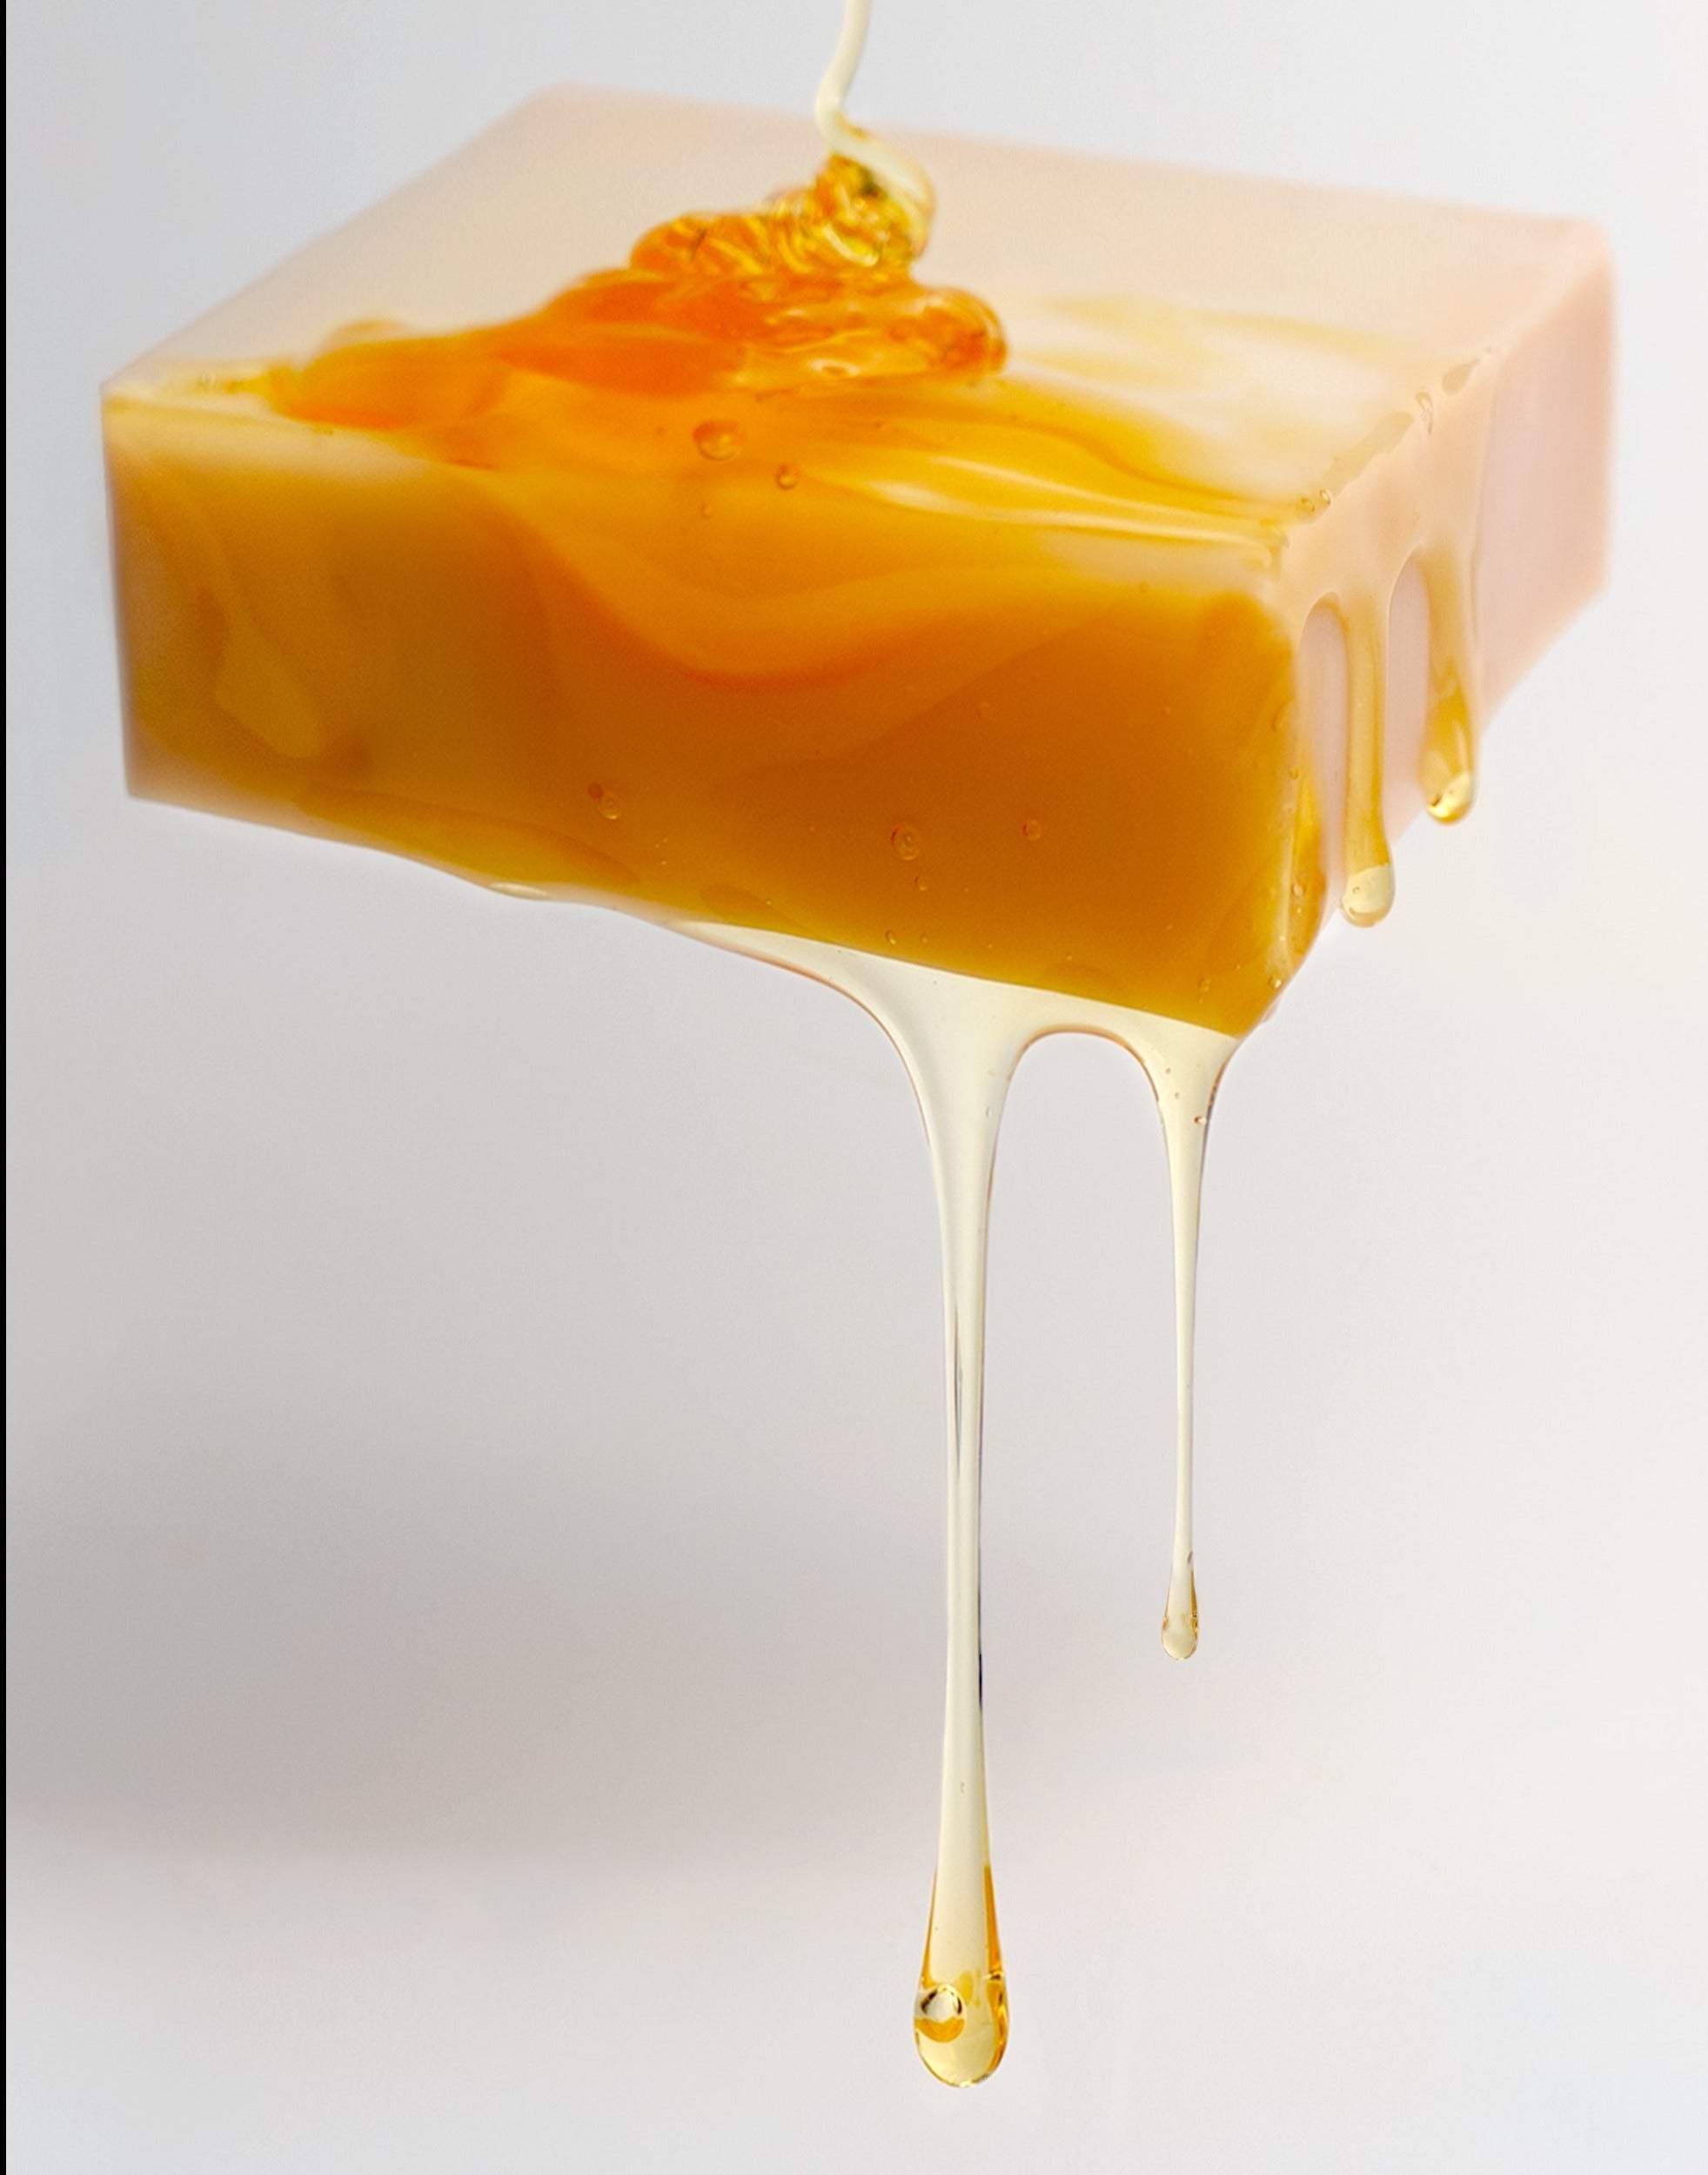 BEAUTI4U 2LB Honey Soap Base - Soap Making Supplies With Soap